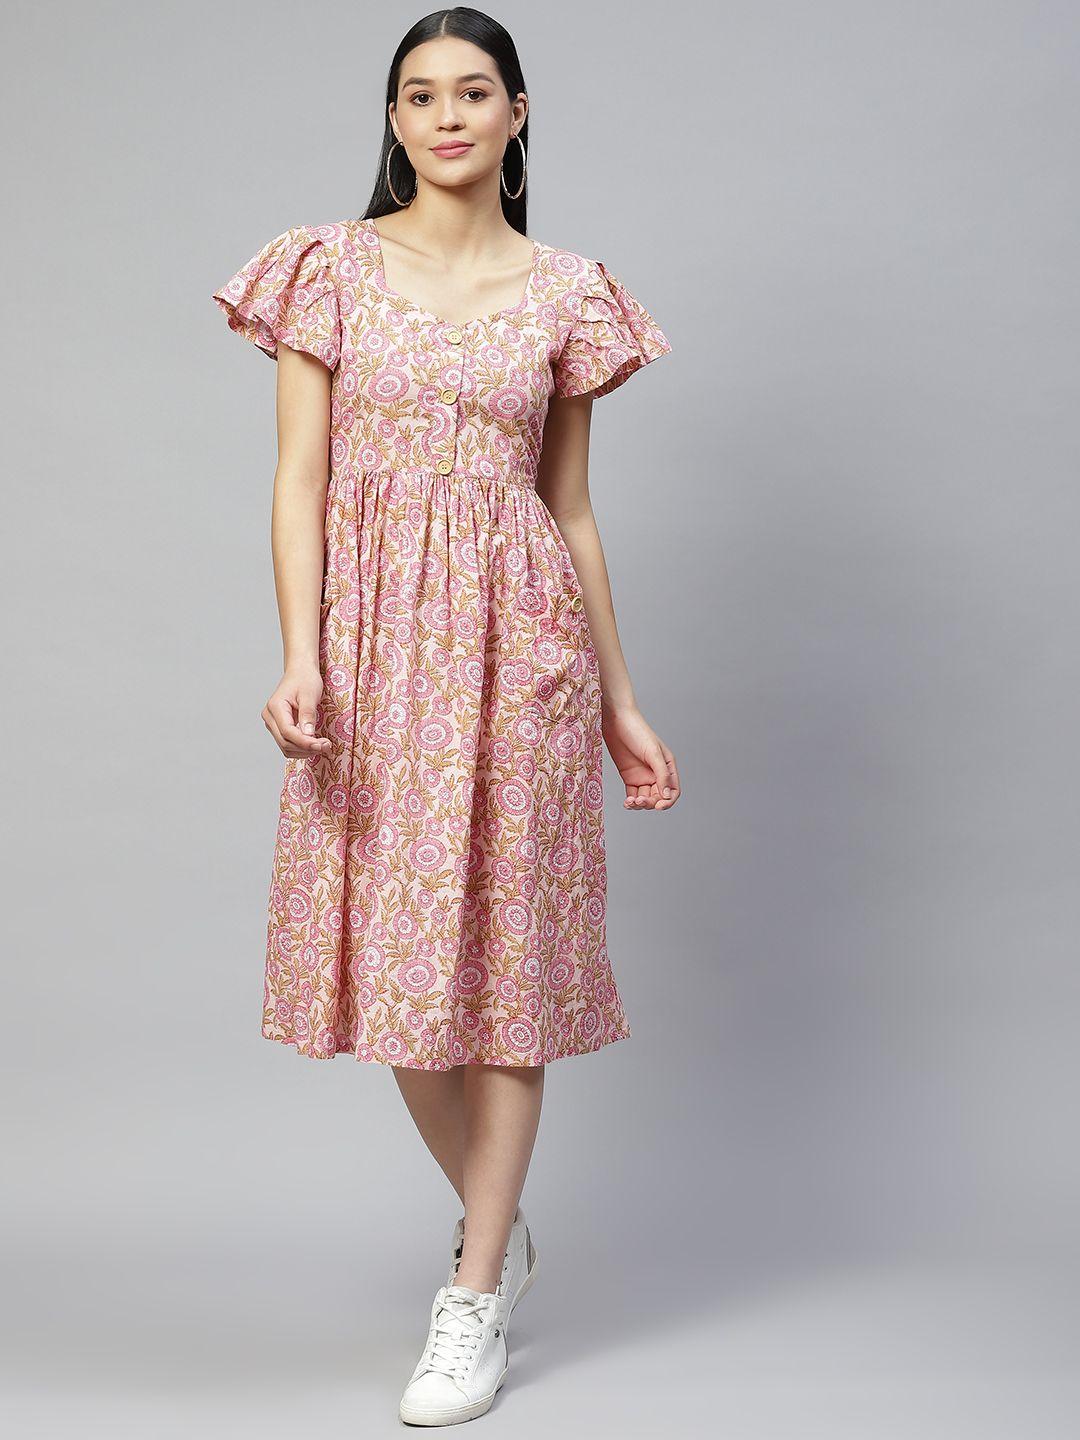 wabii off white & peach-coloured cotton floral print dress